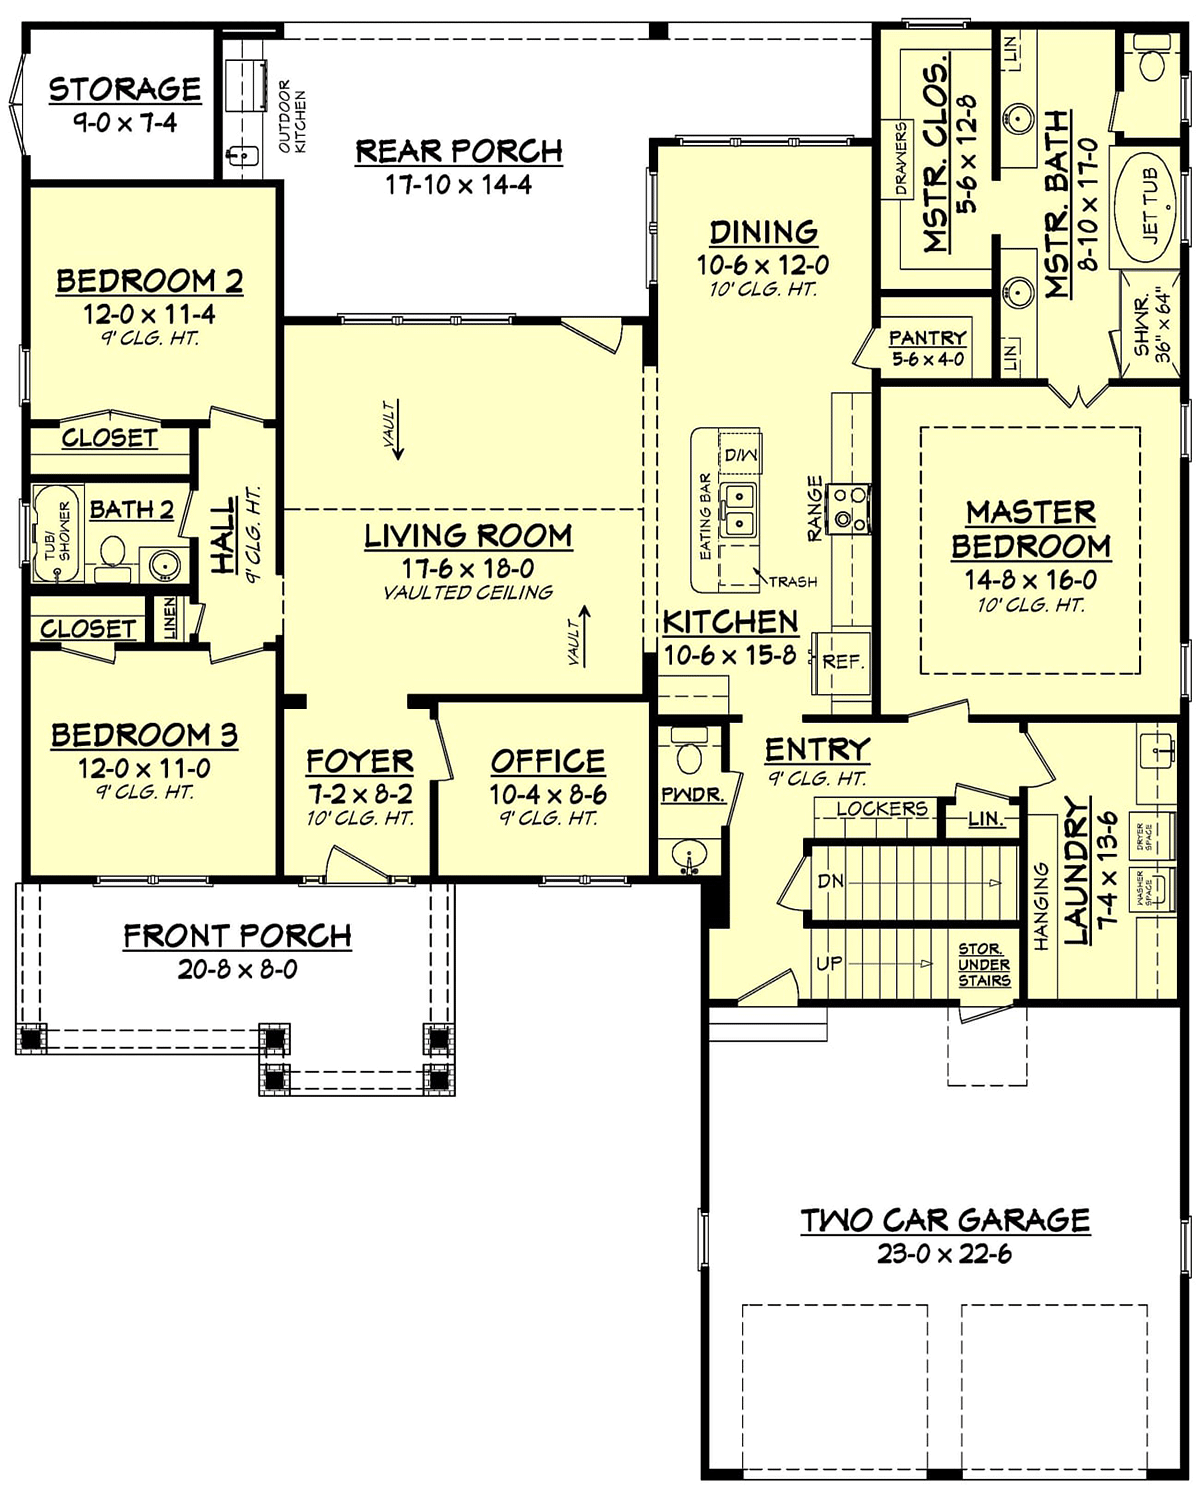 House Plan 56910 Alternate Level One